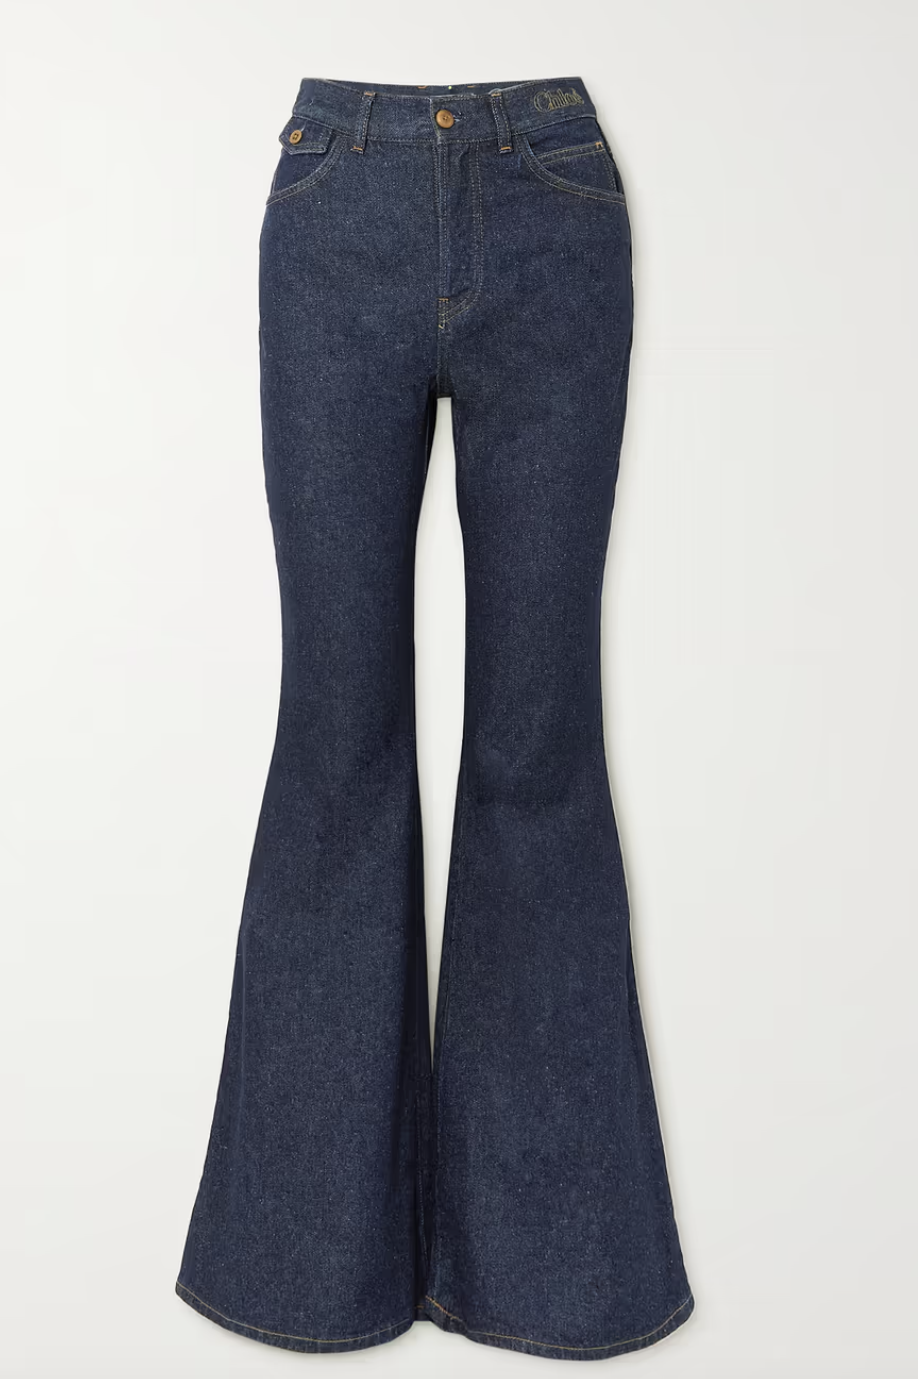 Women's Flare Pants for sale in Belfast, Facebook Marketplace